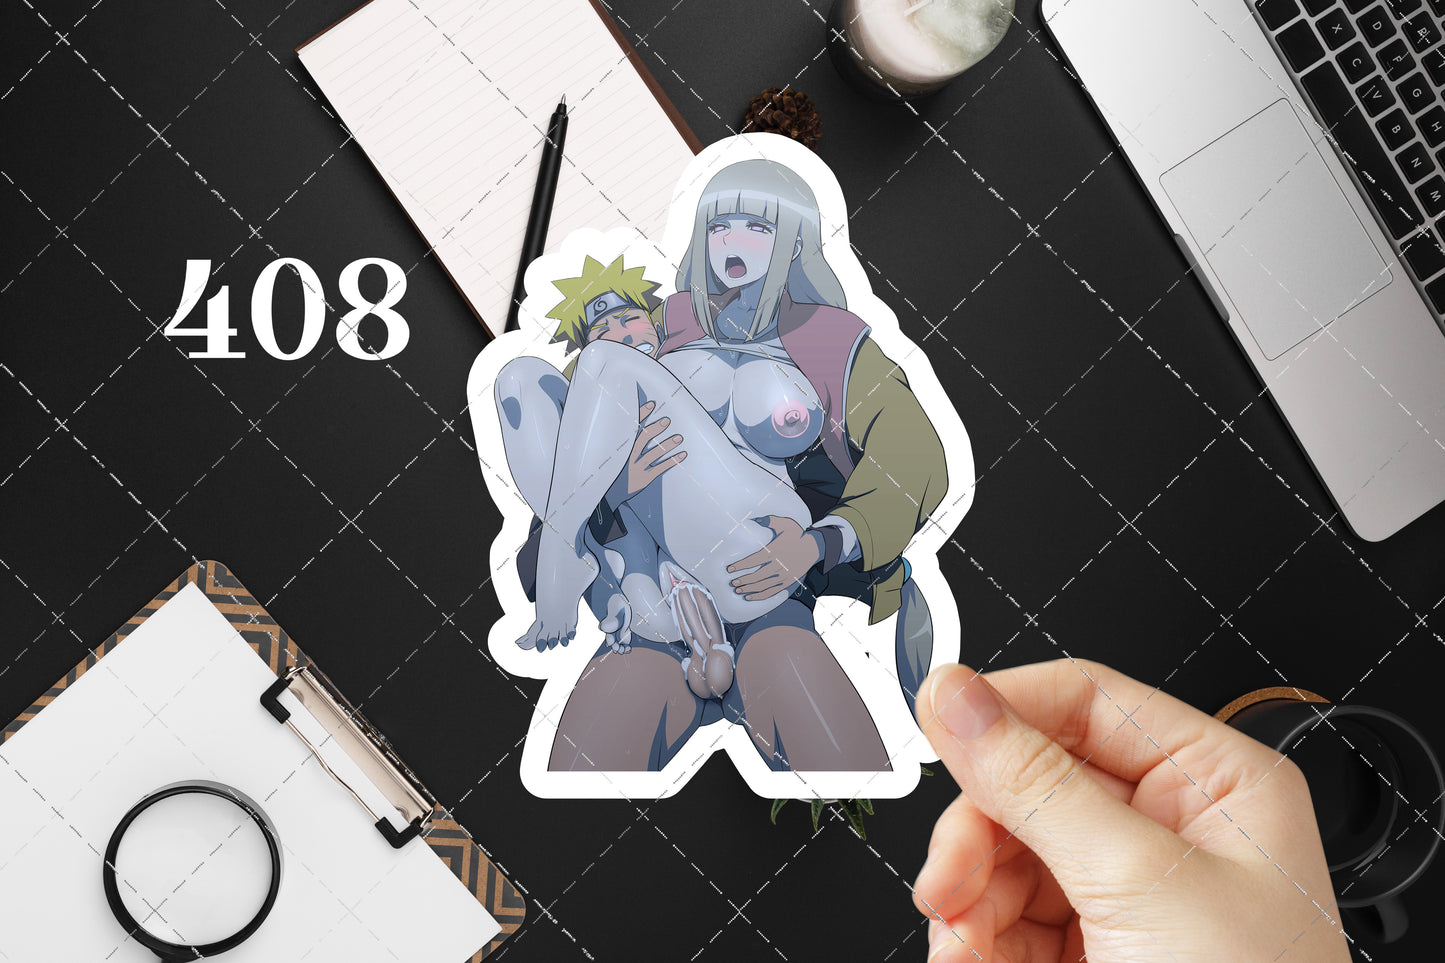 Anime vinyl sticker #408, Naruto, Shion